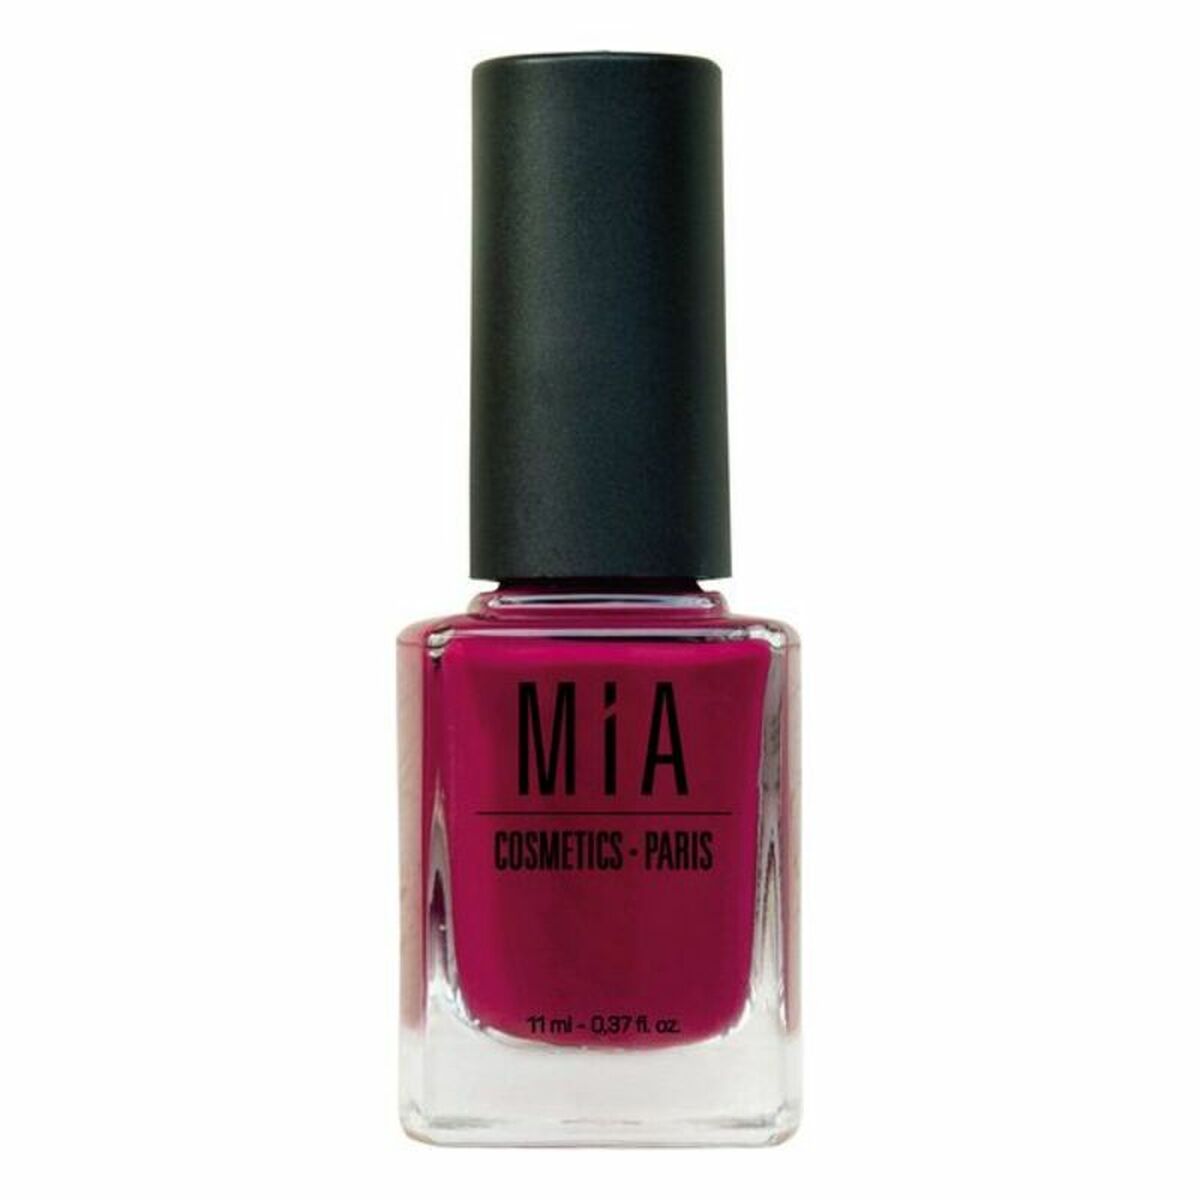 Nail polish Mia Cosmetics Paris Magenta (11 ml) - Calm Beauty IE